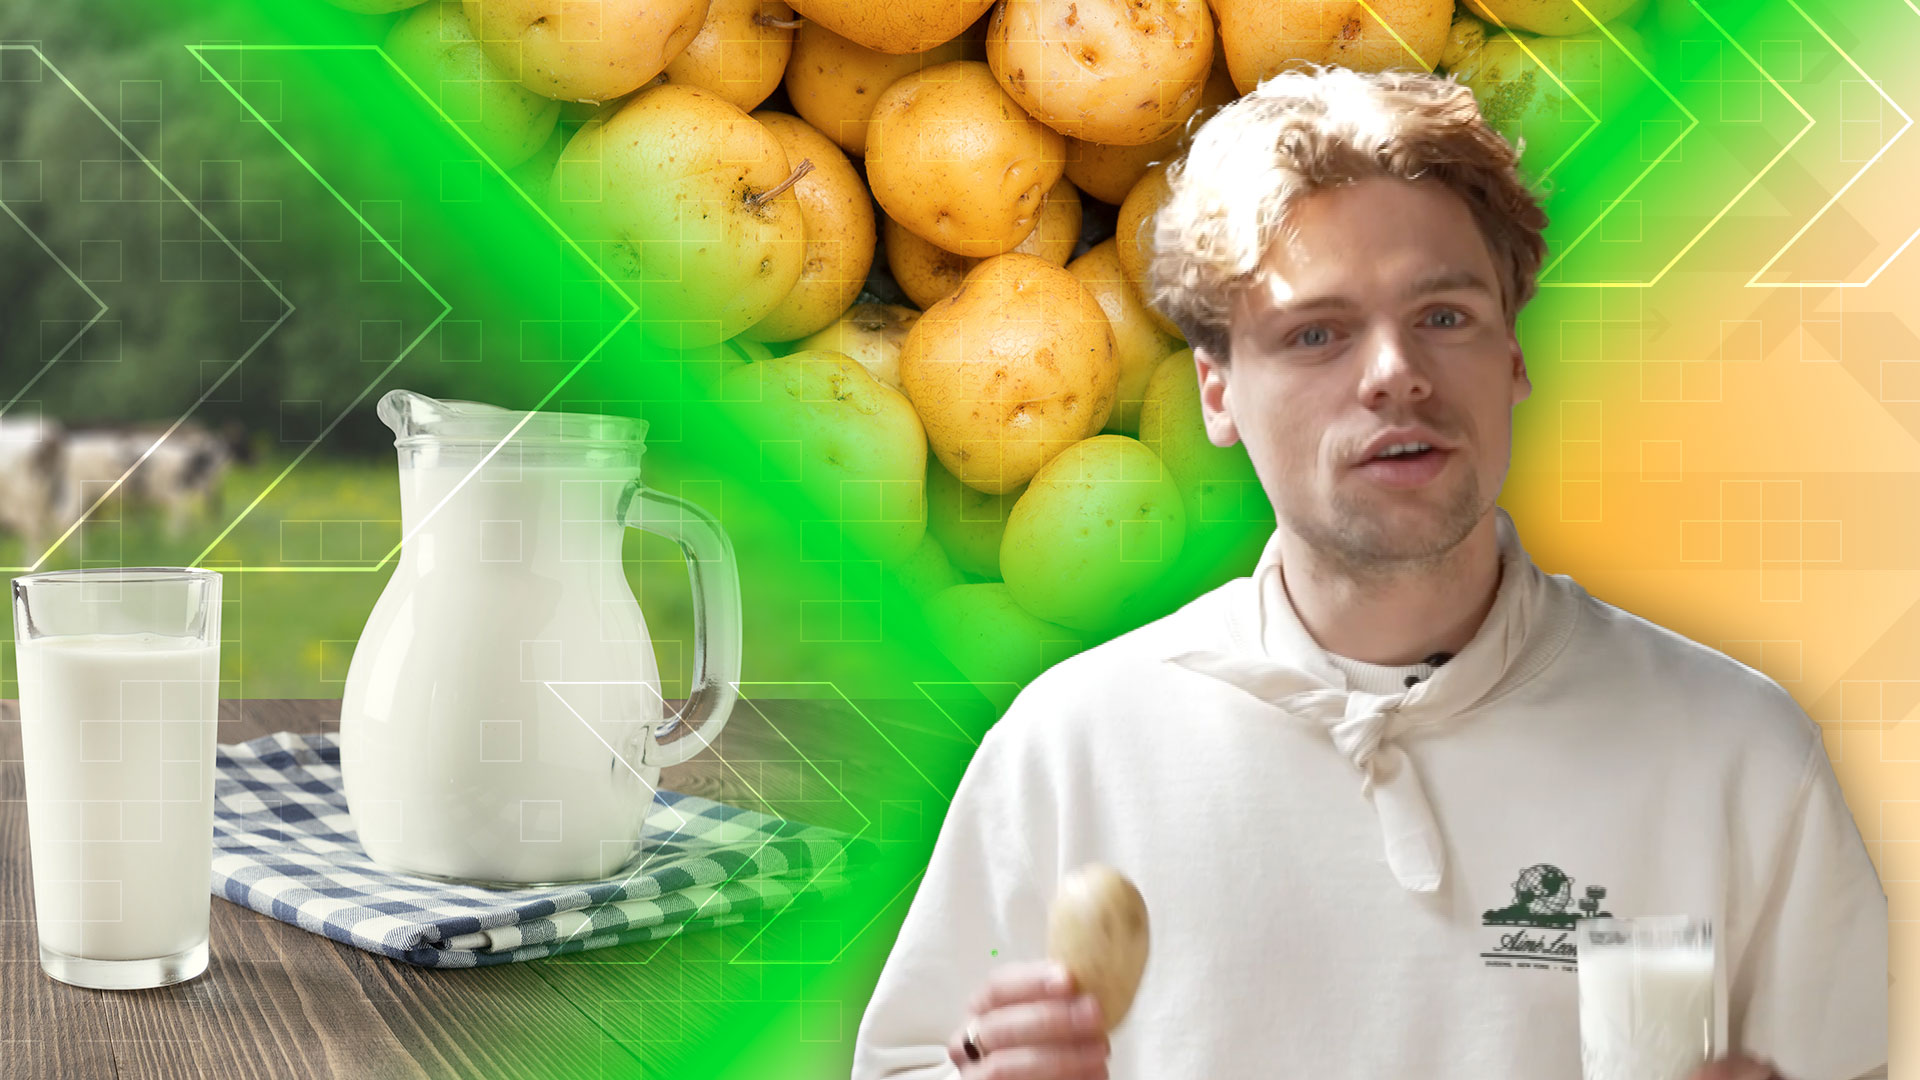 dilemma chef van der lecq aardappels melk